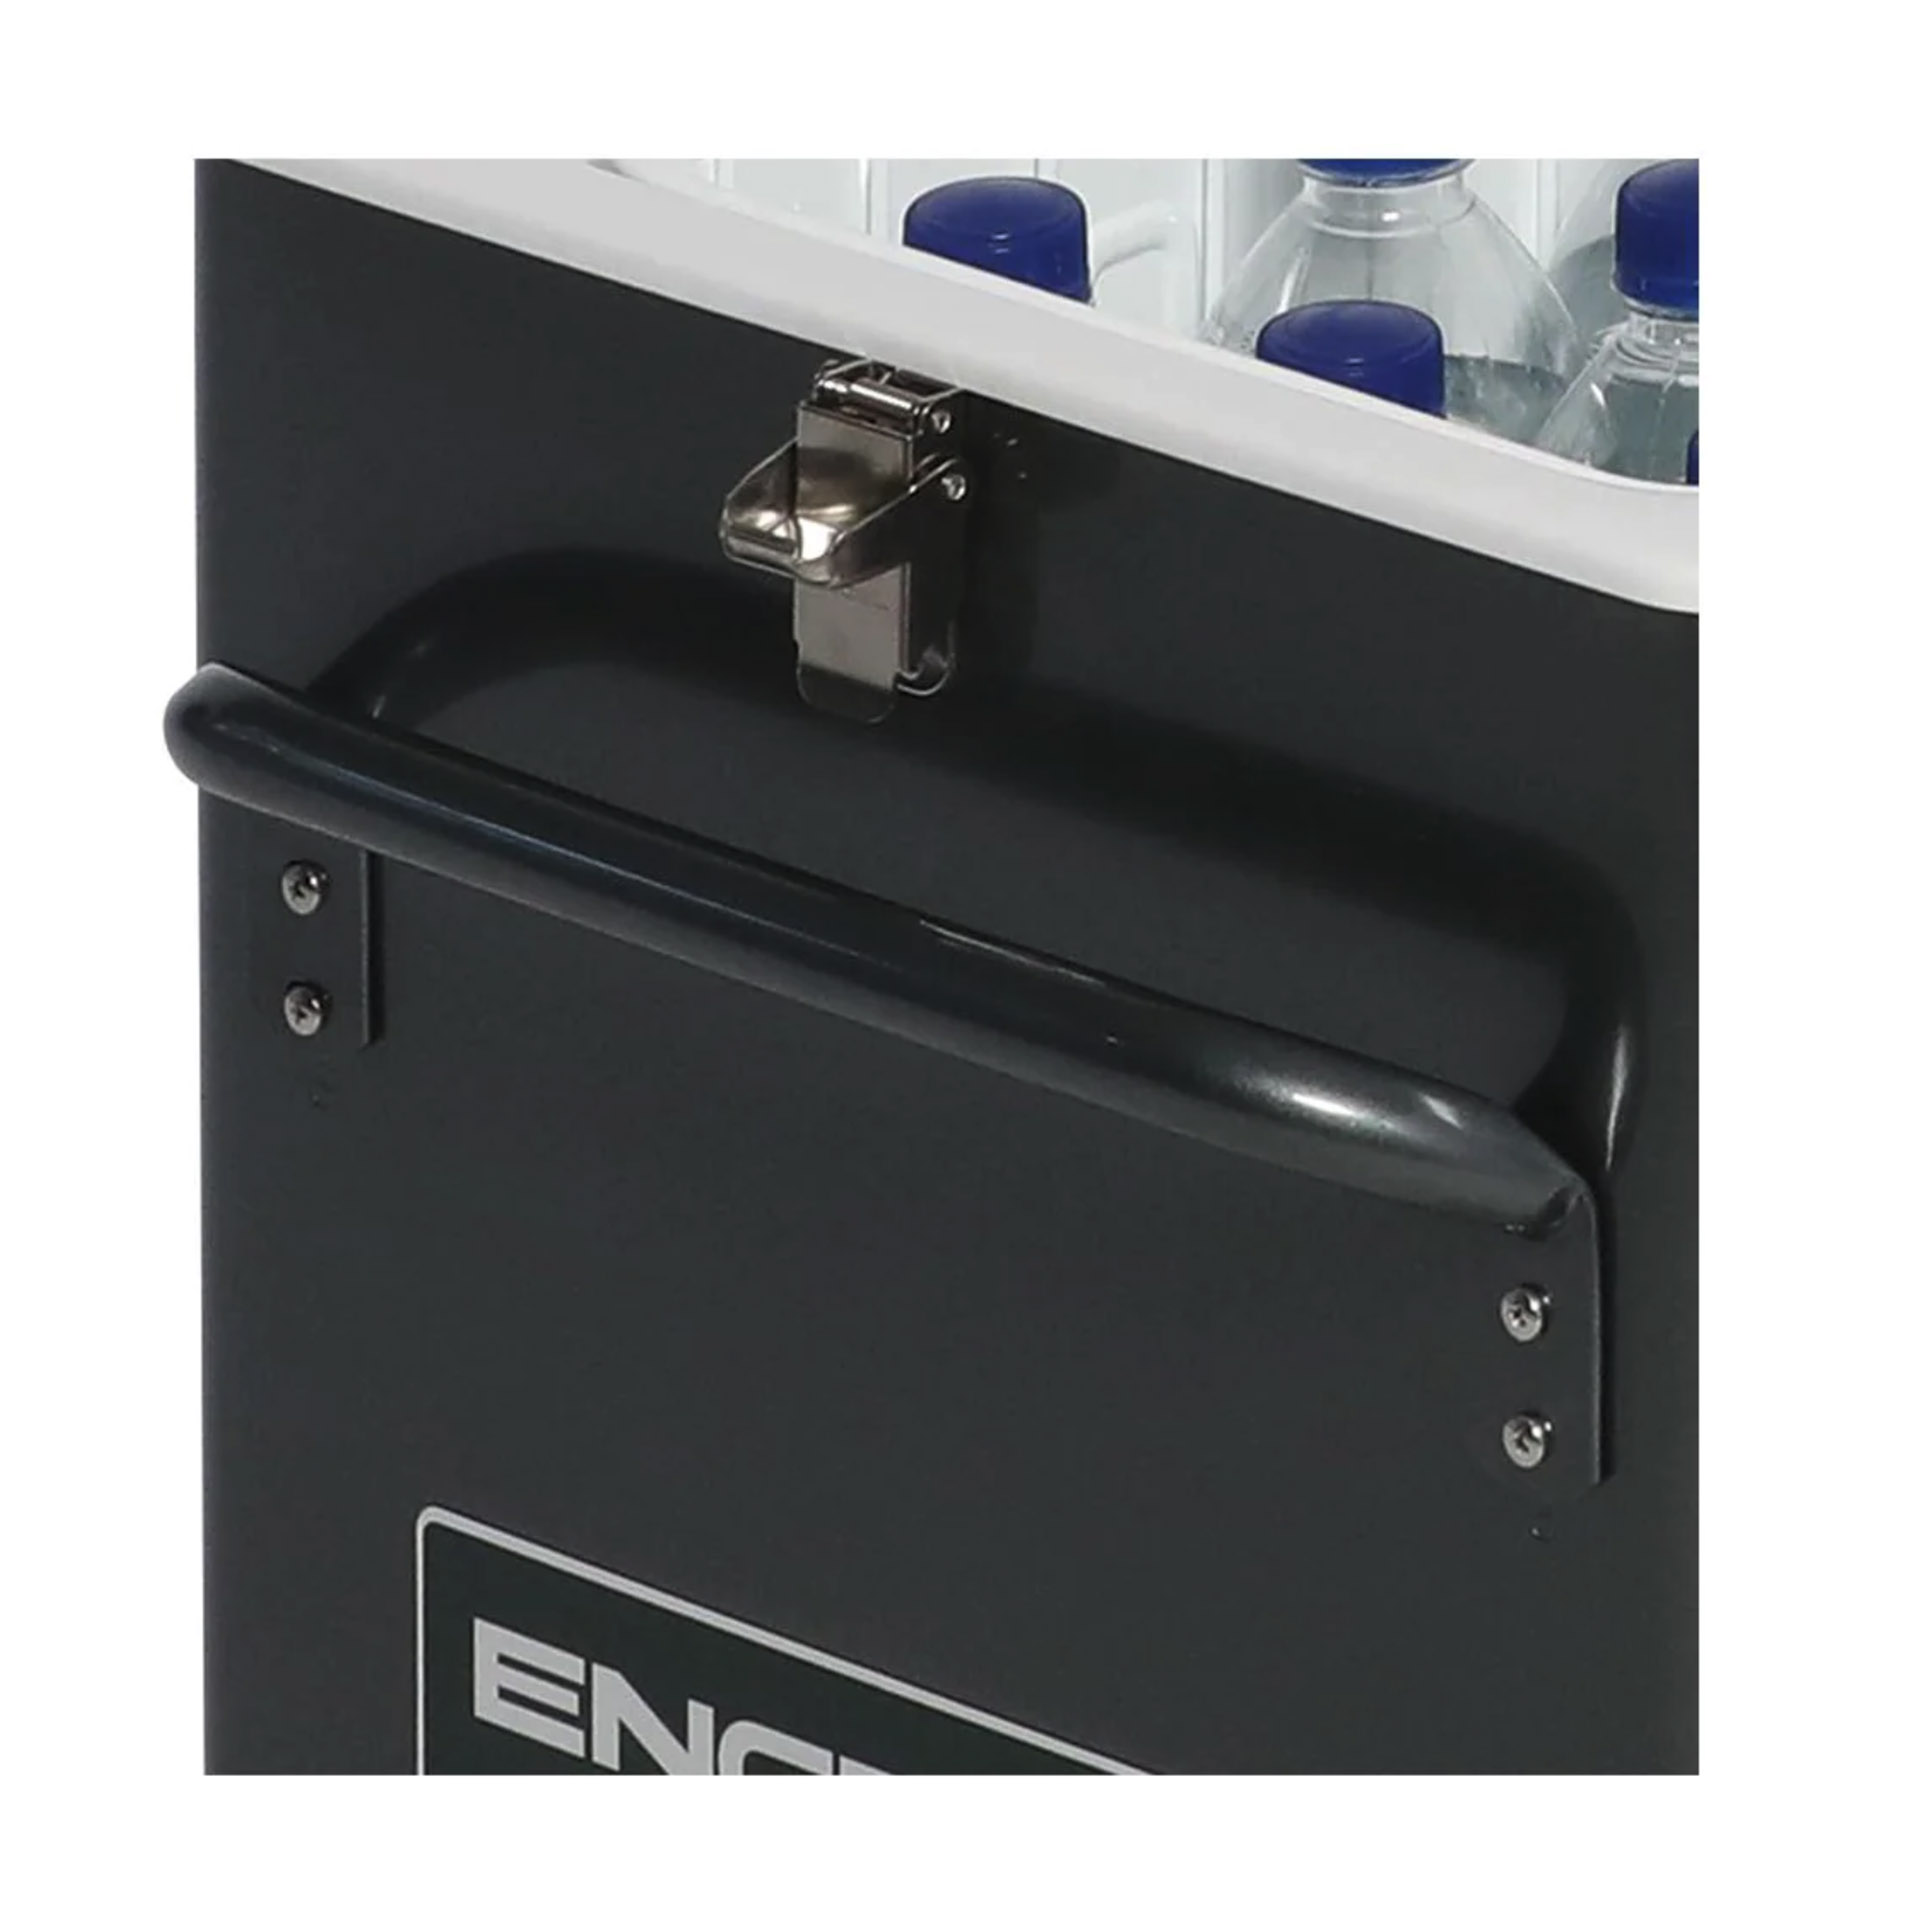 Kompressor-Kühlbox Engel MT35-FS mit Digitalthermometer